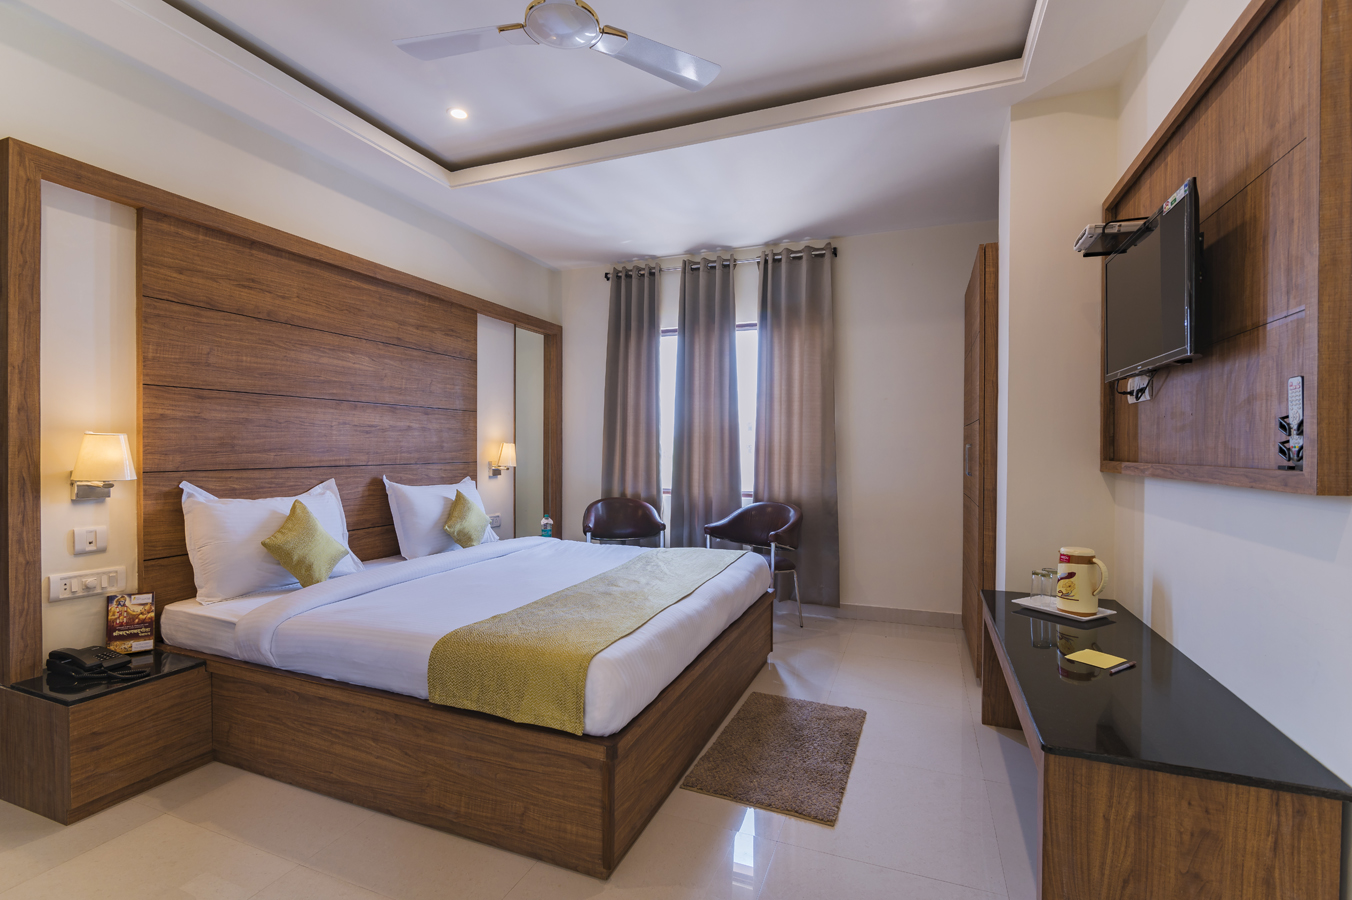 Hotel room near prem mandir vrindavan